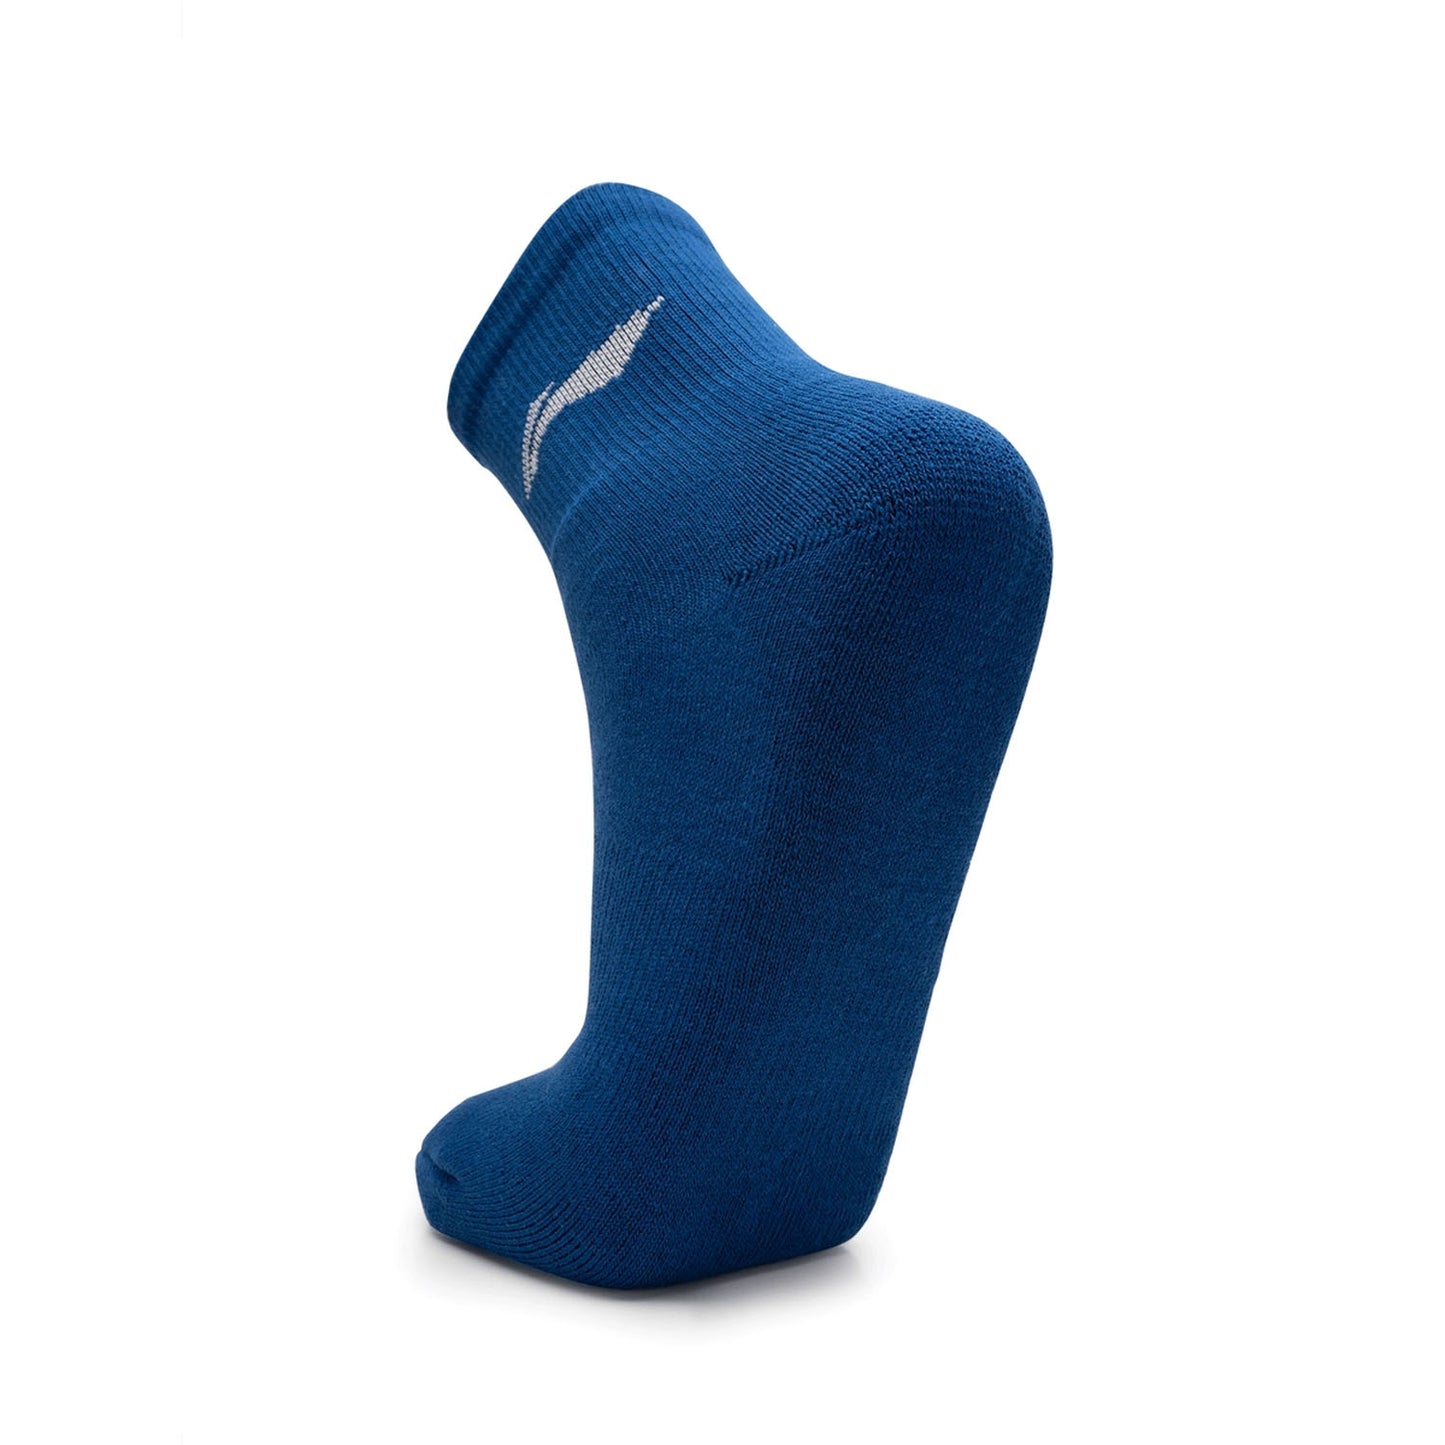 Li-Ning AWLS179 Cotton Men's Sports Socks, 1 Pair - Best Price online Prokicksports.com